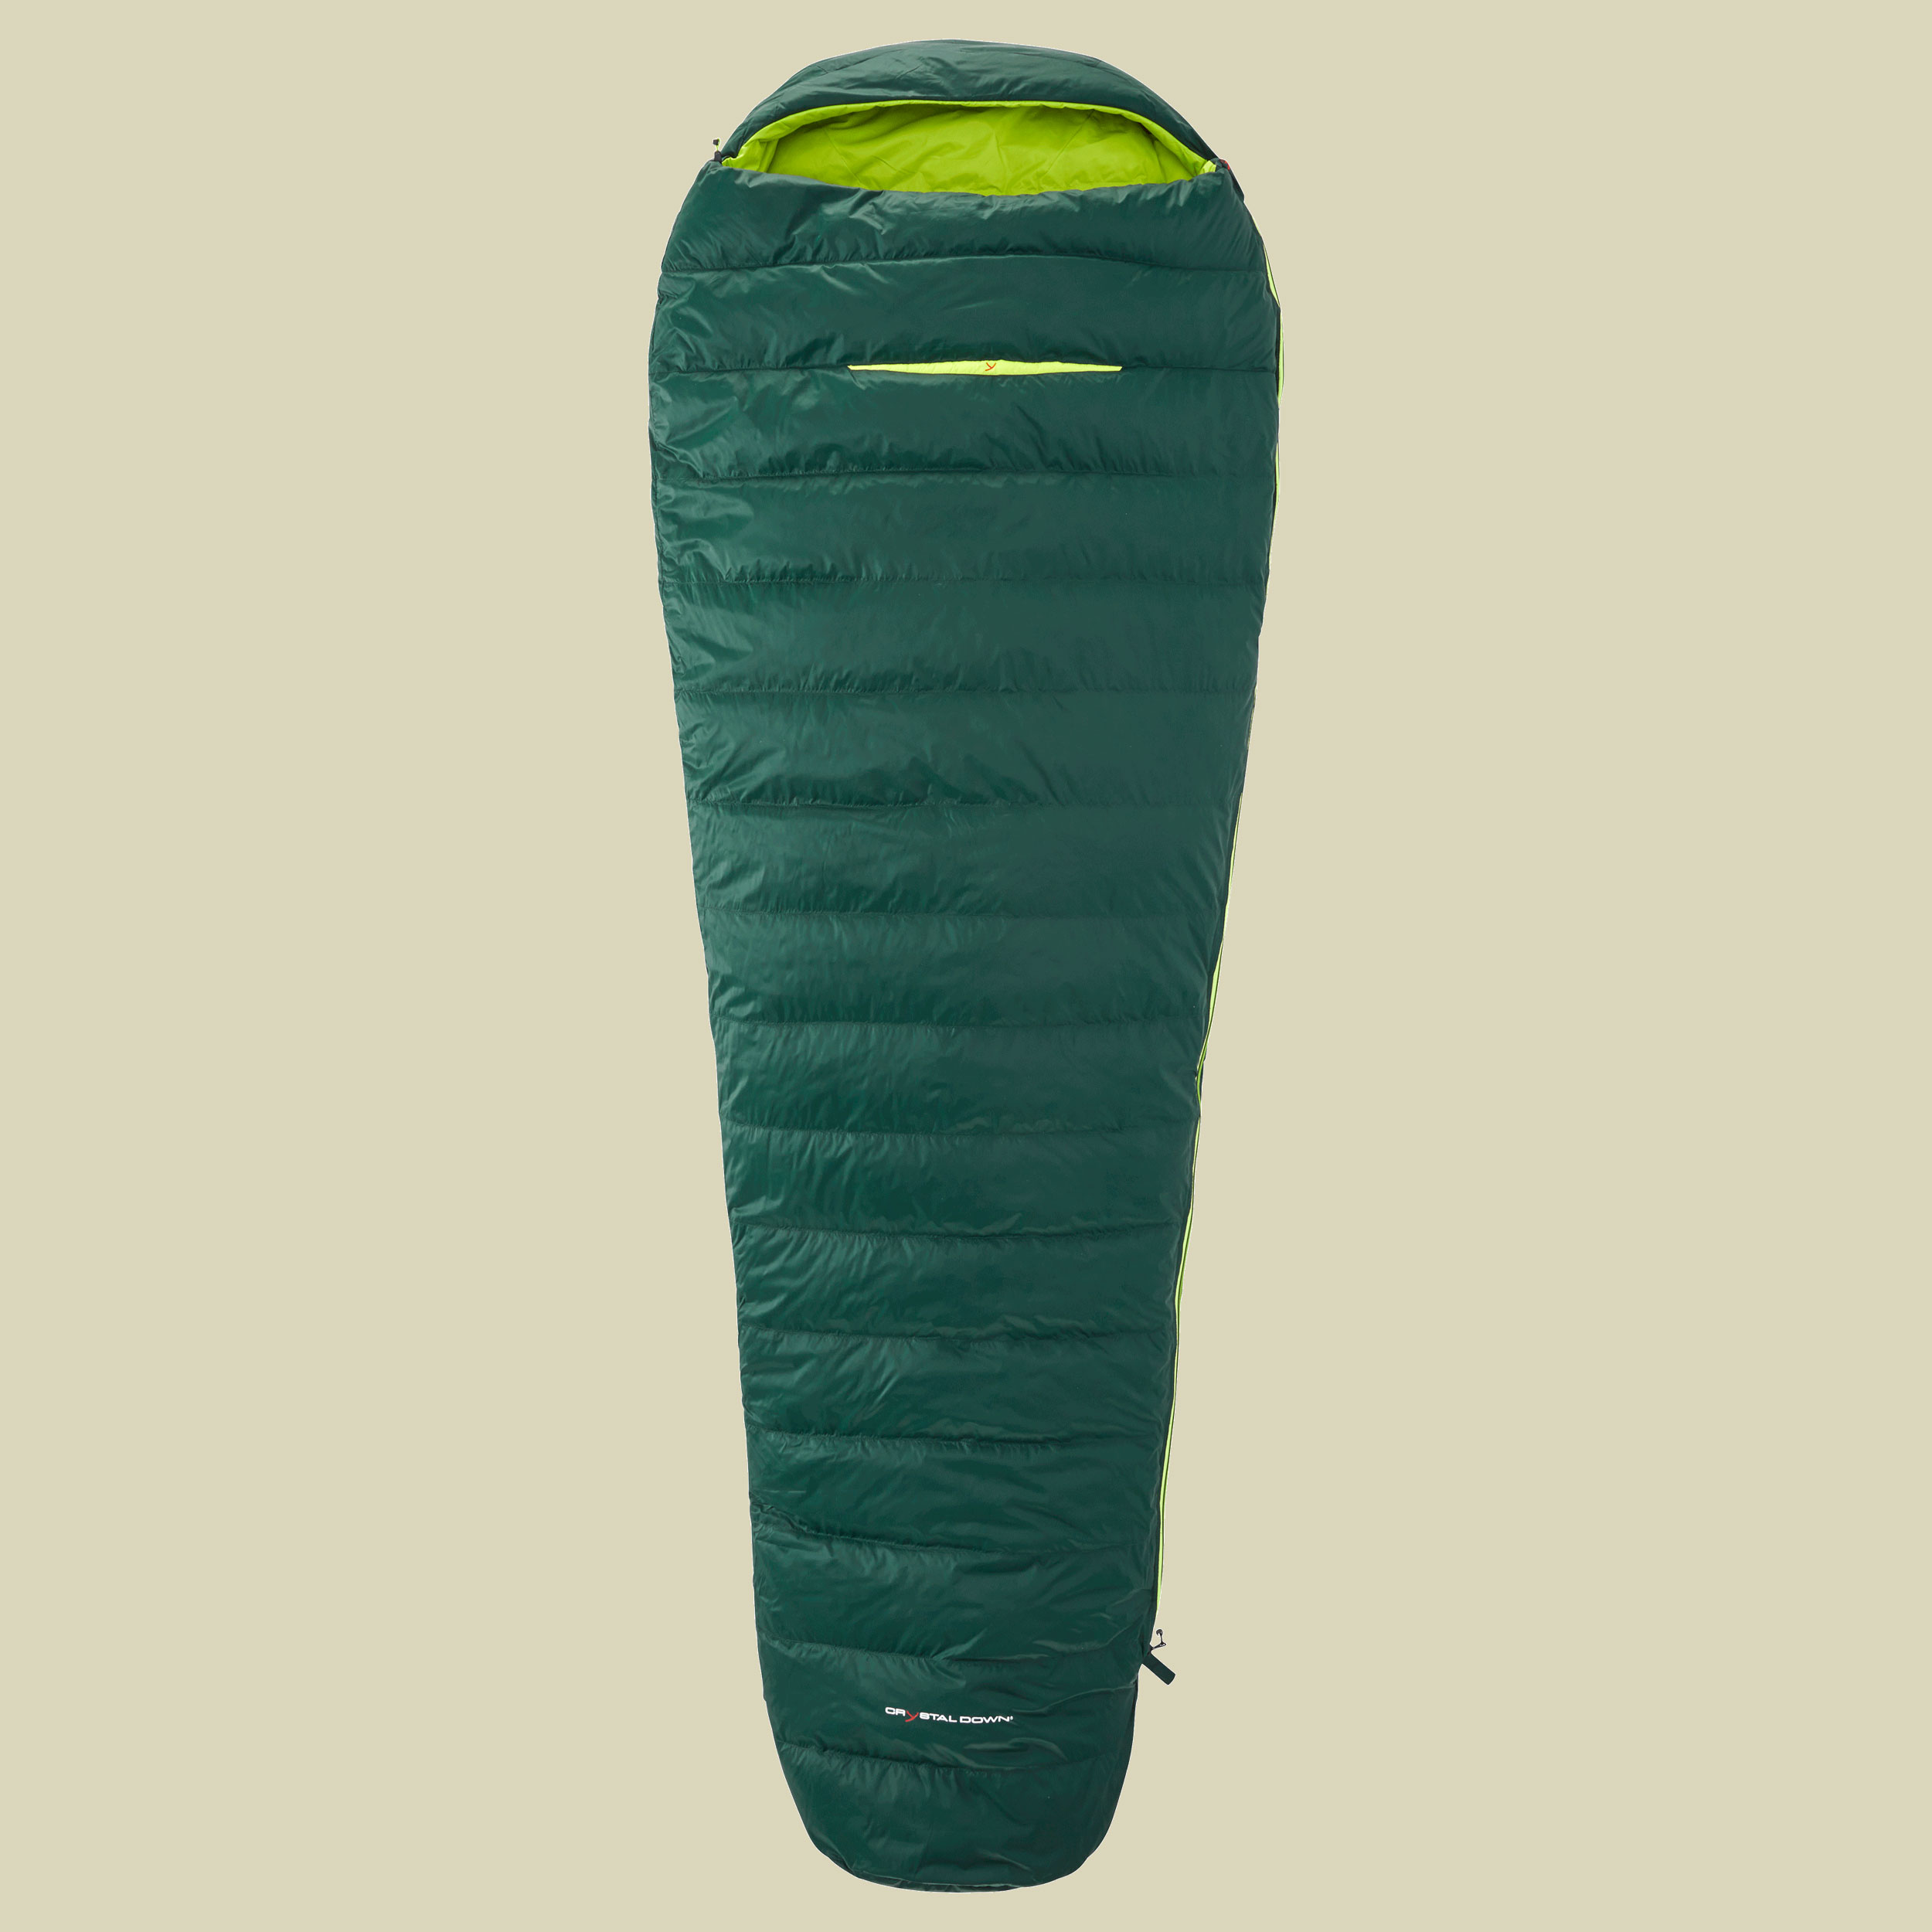 Tension Mummy 300 bis Körpergröße 205cm (XL) Farbe scarab/lime, Reißverschluss links